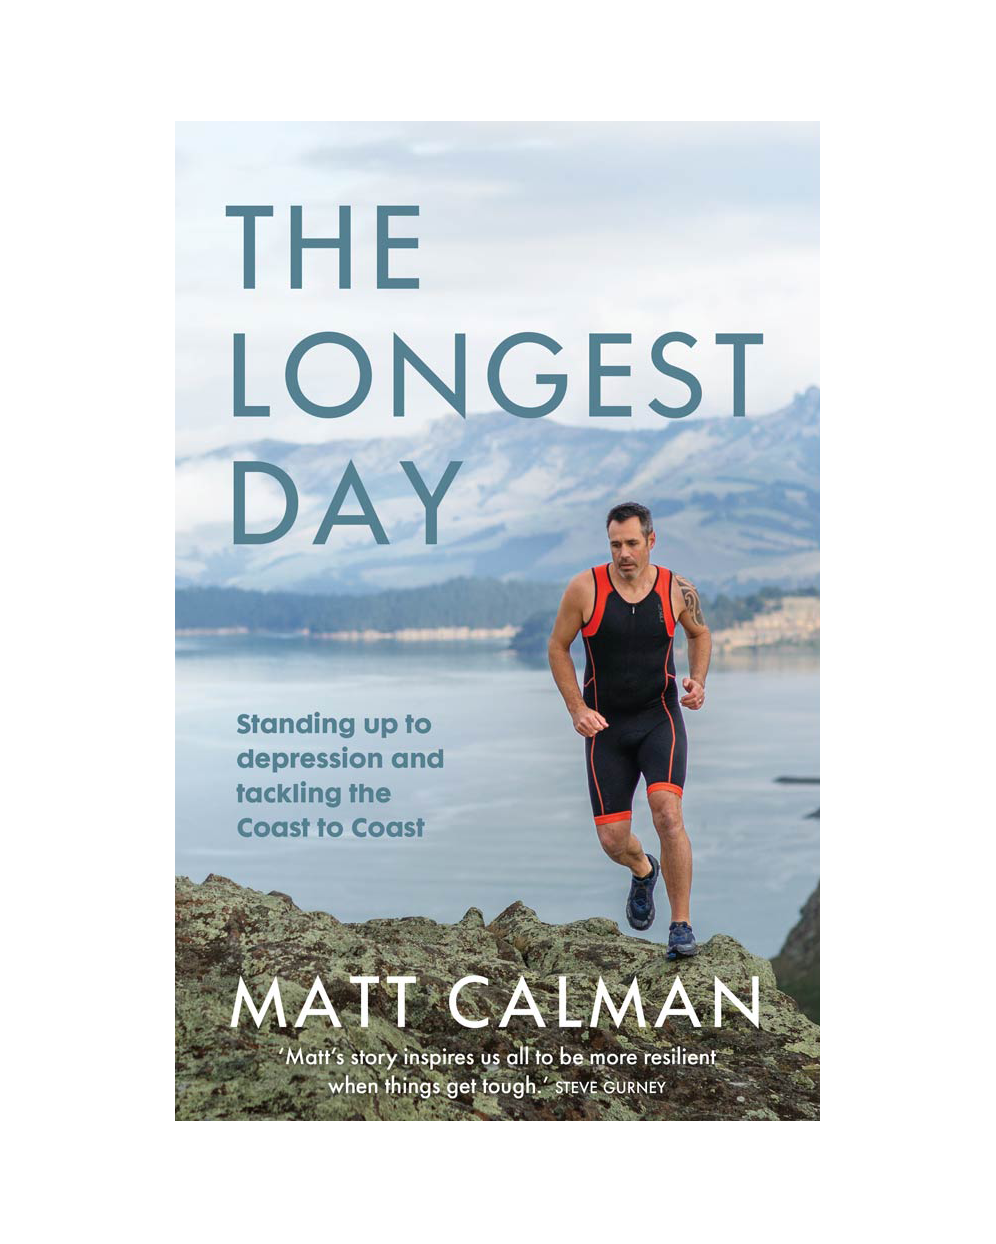 The Longest Day by Matt Calman